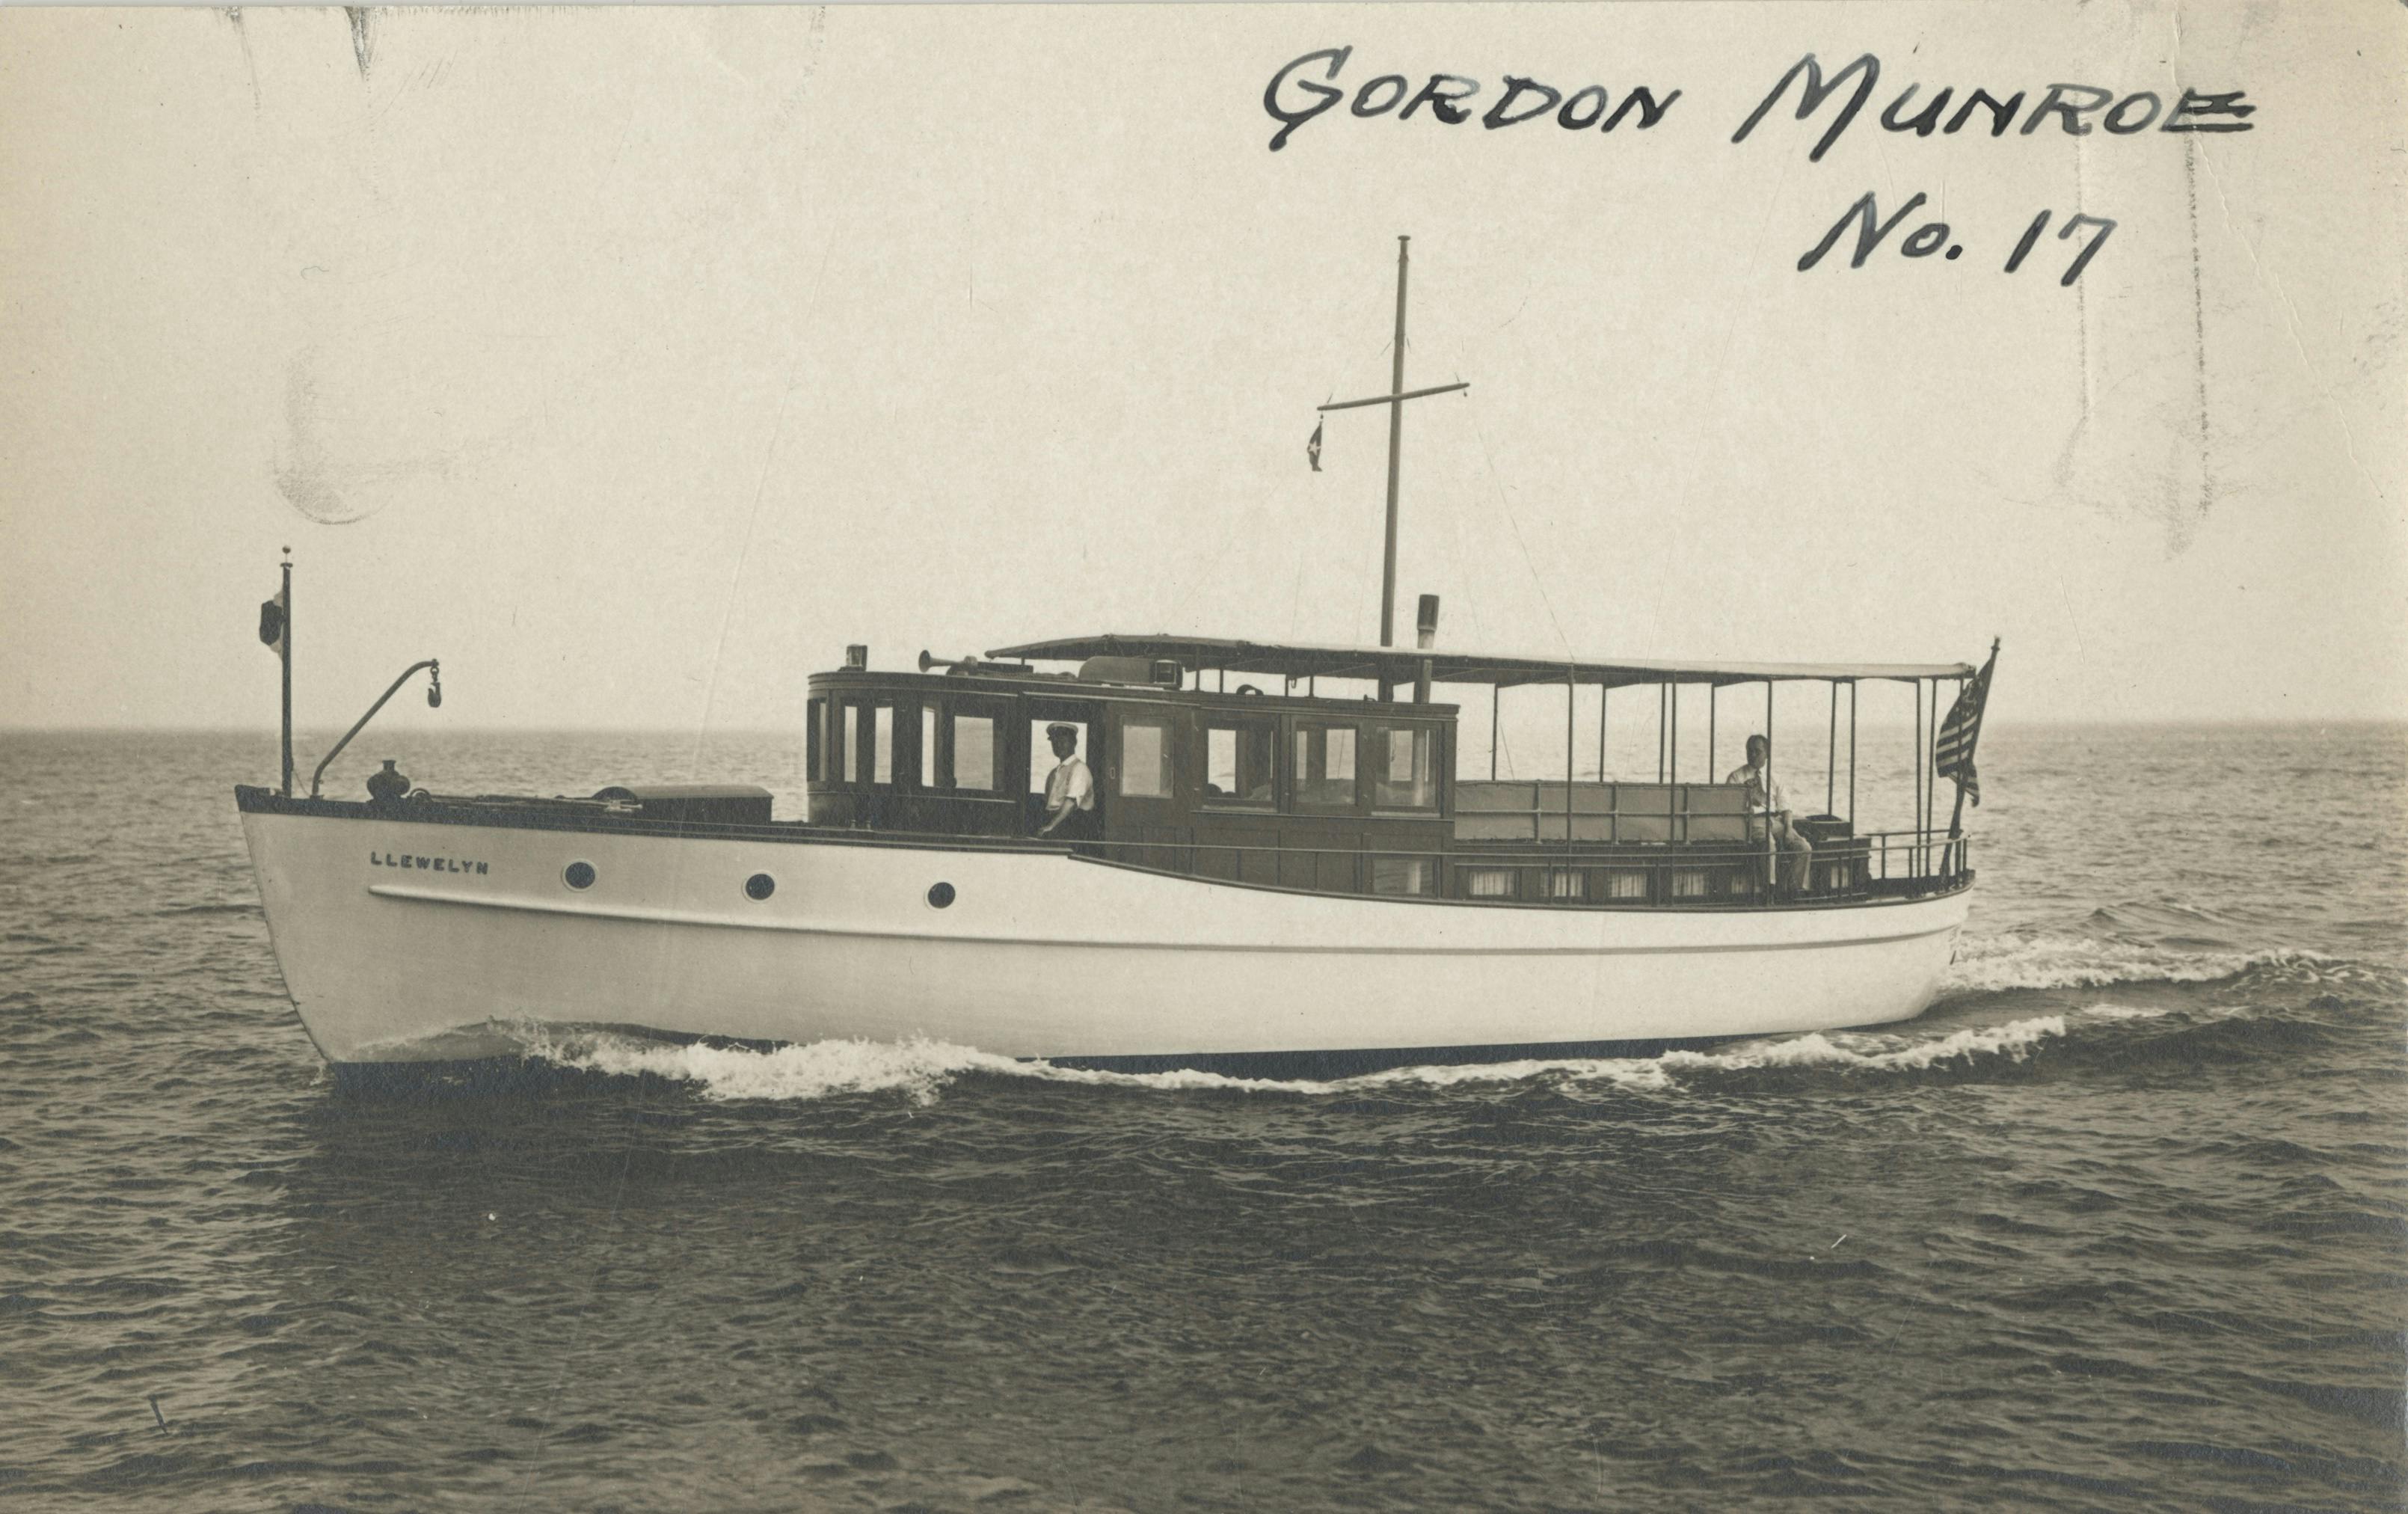 postcard of the Llewellen, a small motorsailer